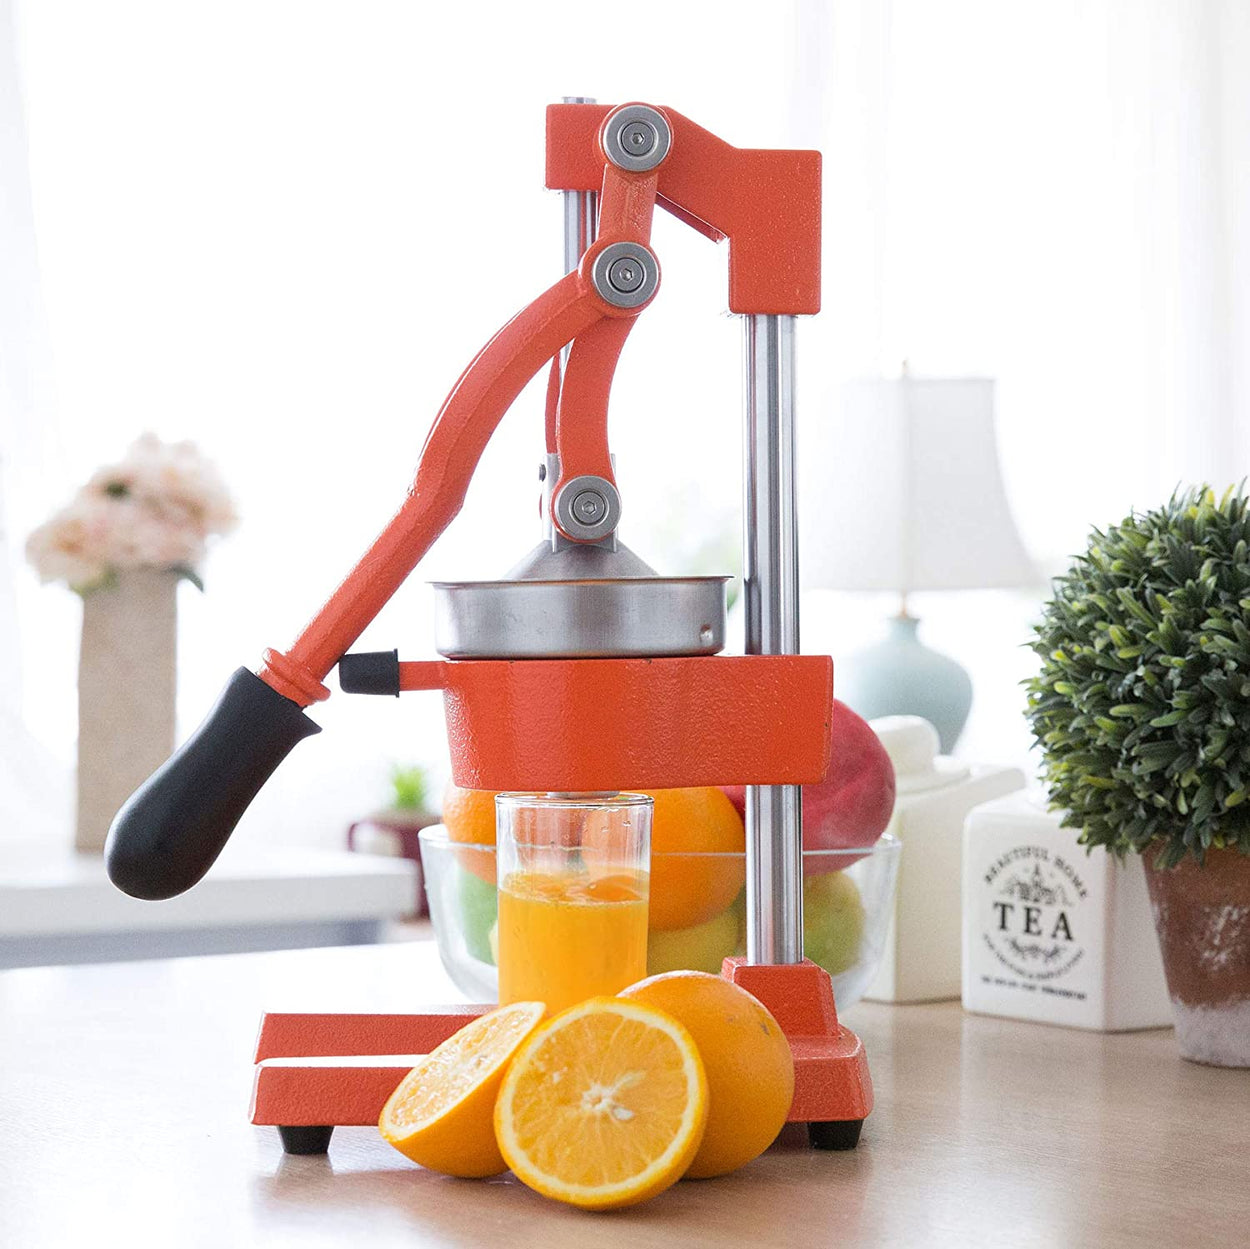 CO-Z Commercial Grade Citrus Juicer  (Orange)